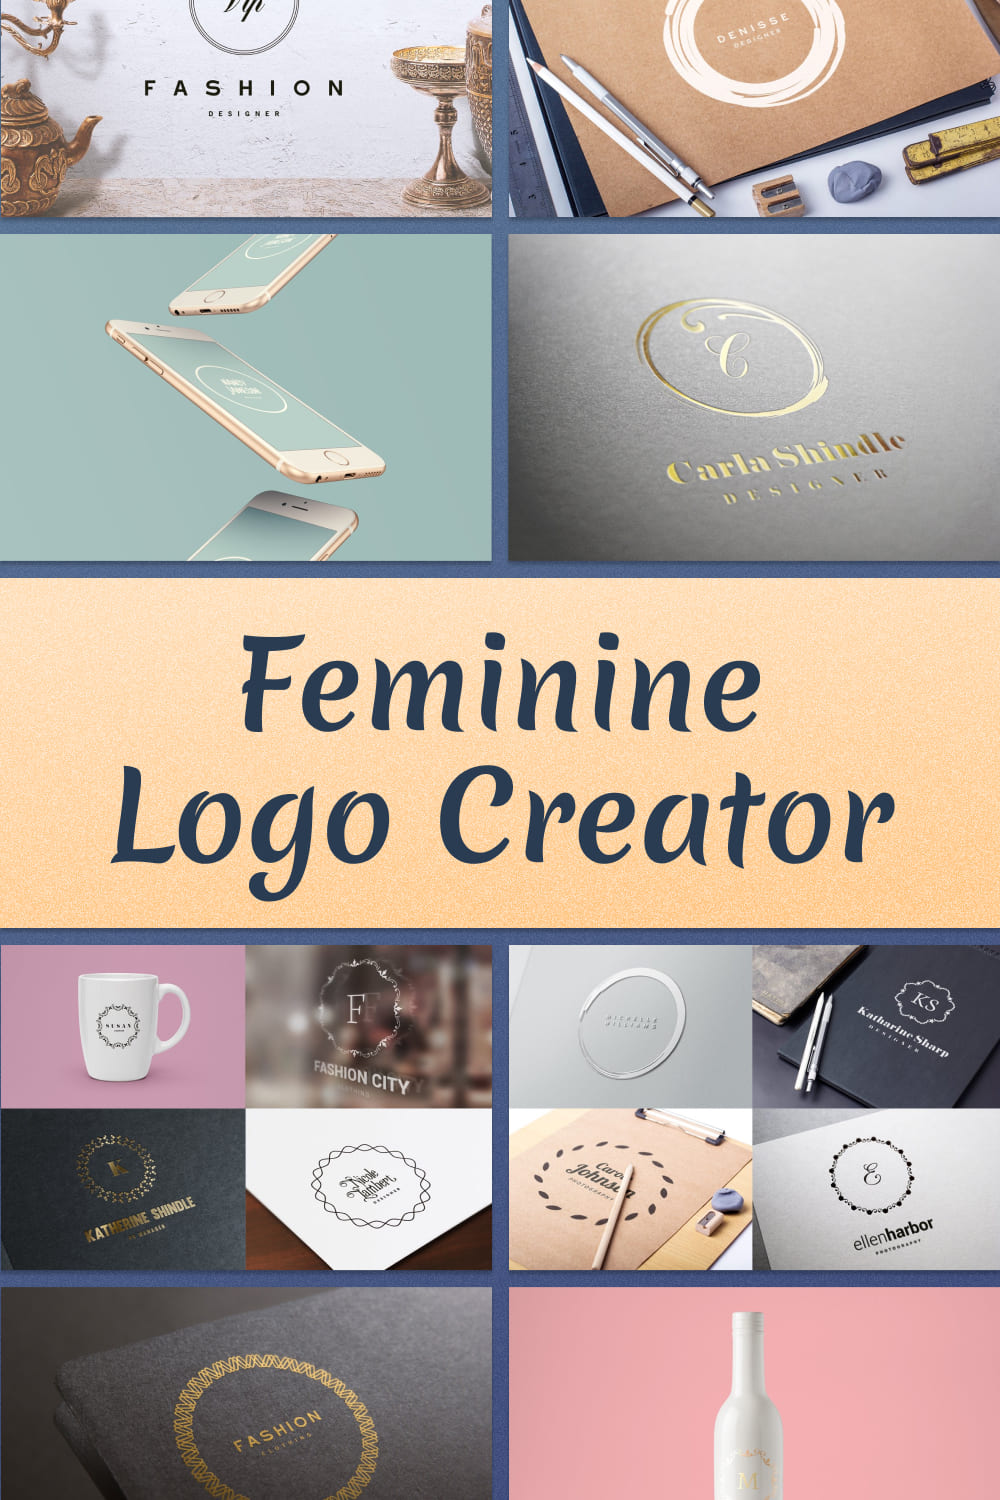 Feminine Logo Creator - Pinterest Image Preview.